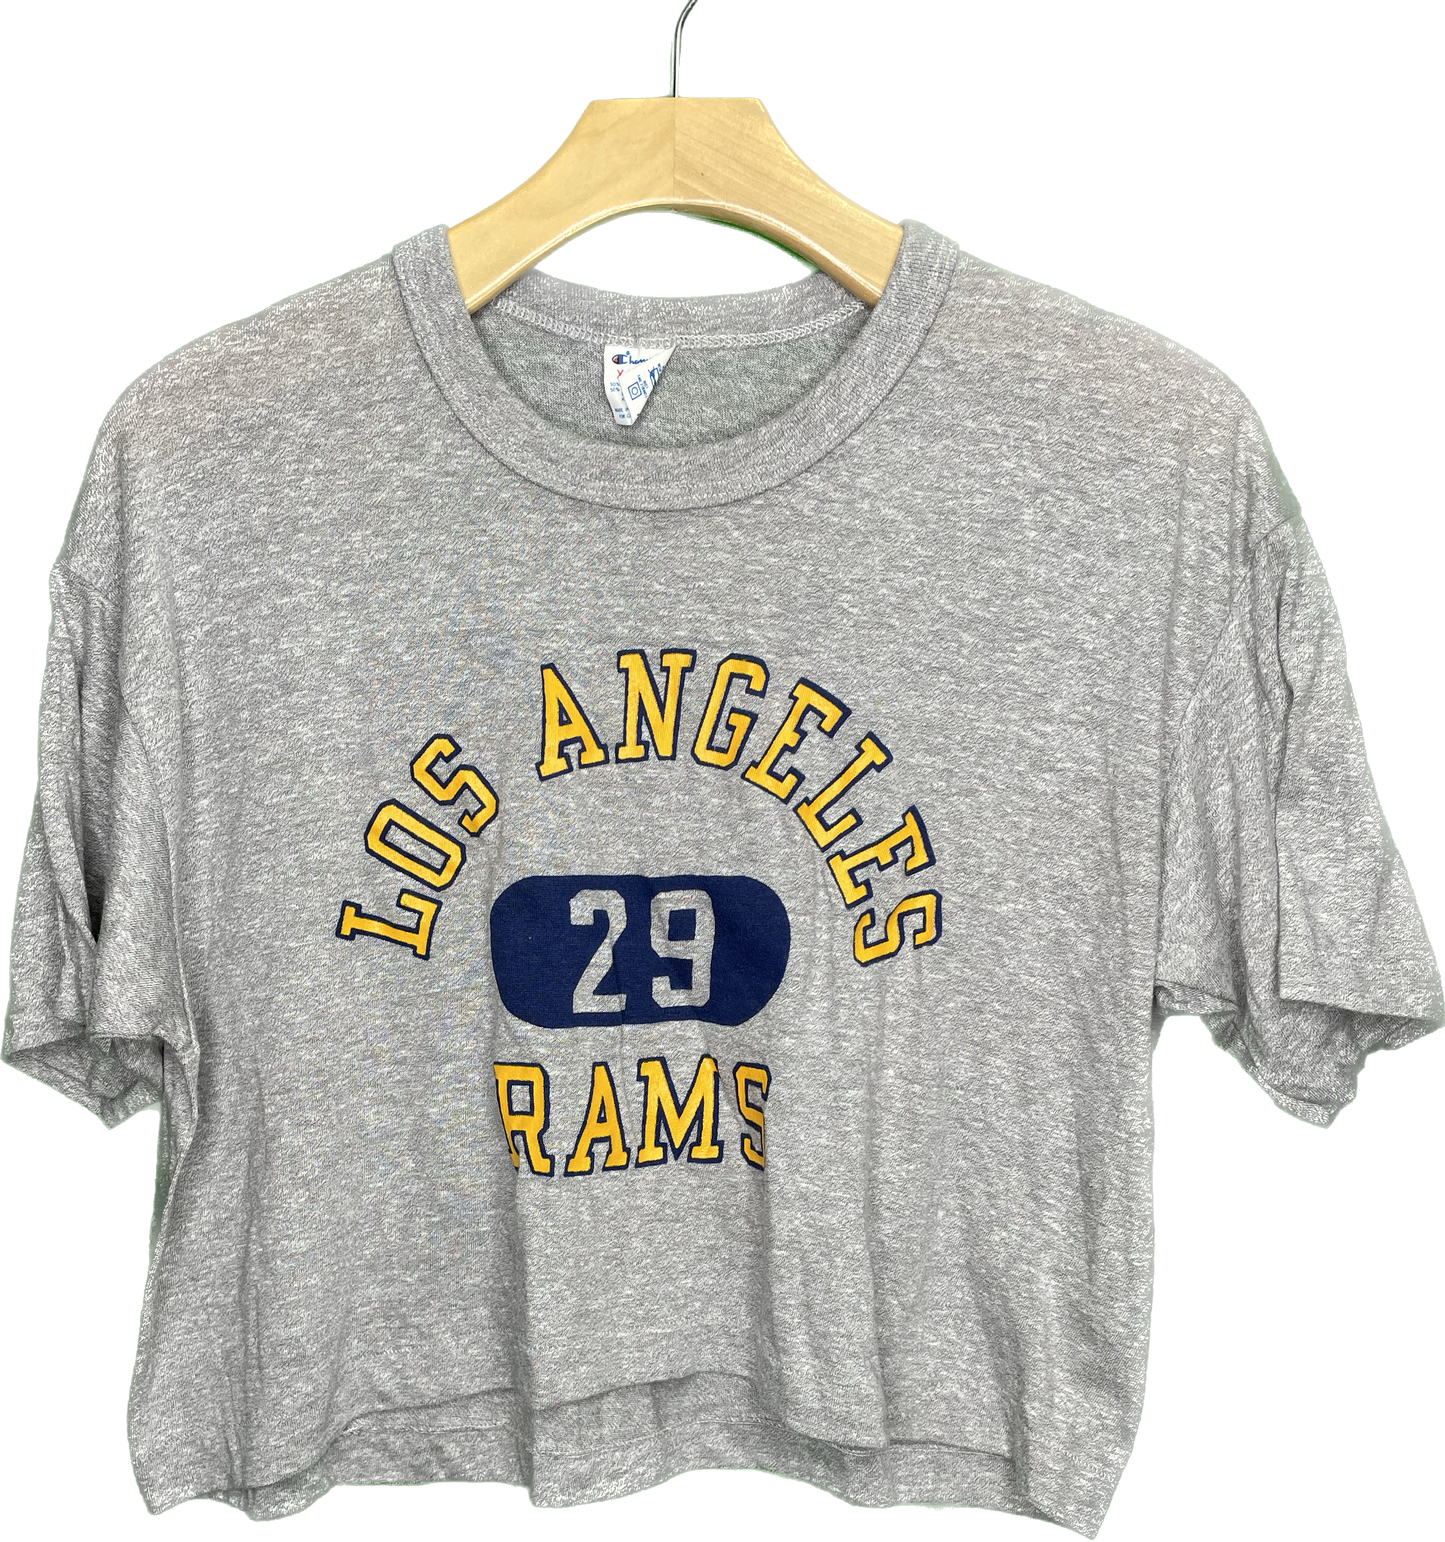 Vintage M 80s Los Angeles Rams NFL Crop Top Champion T-Shirt